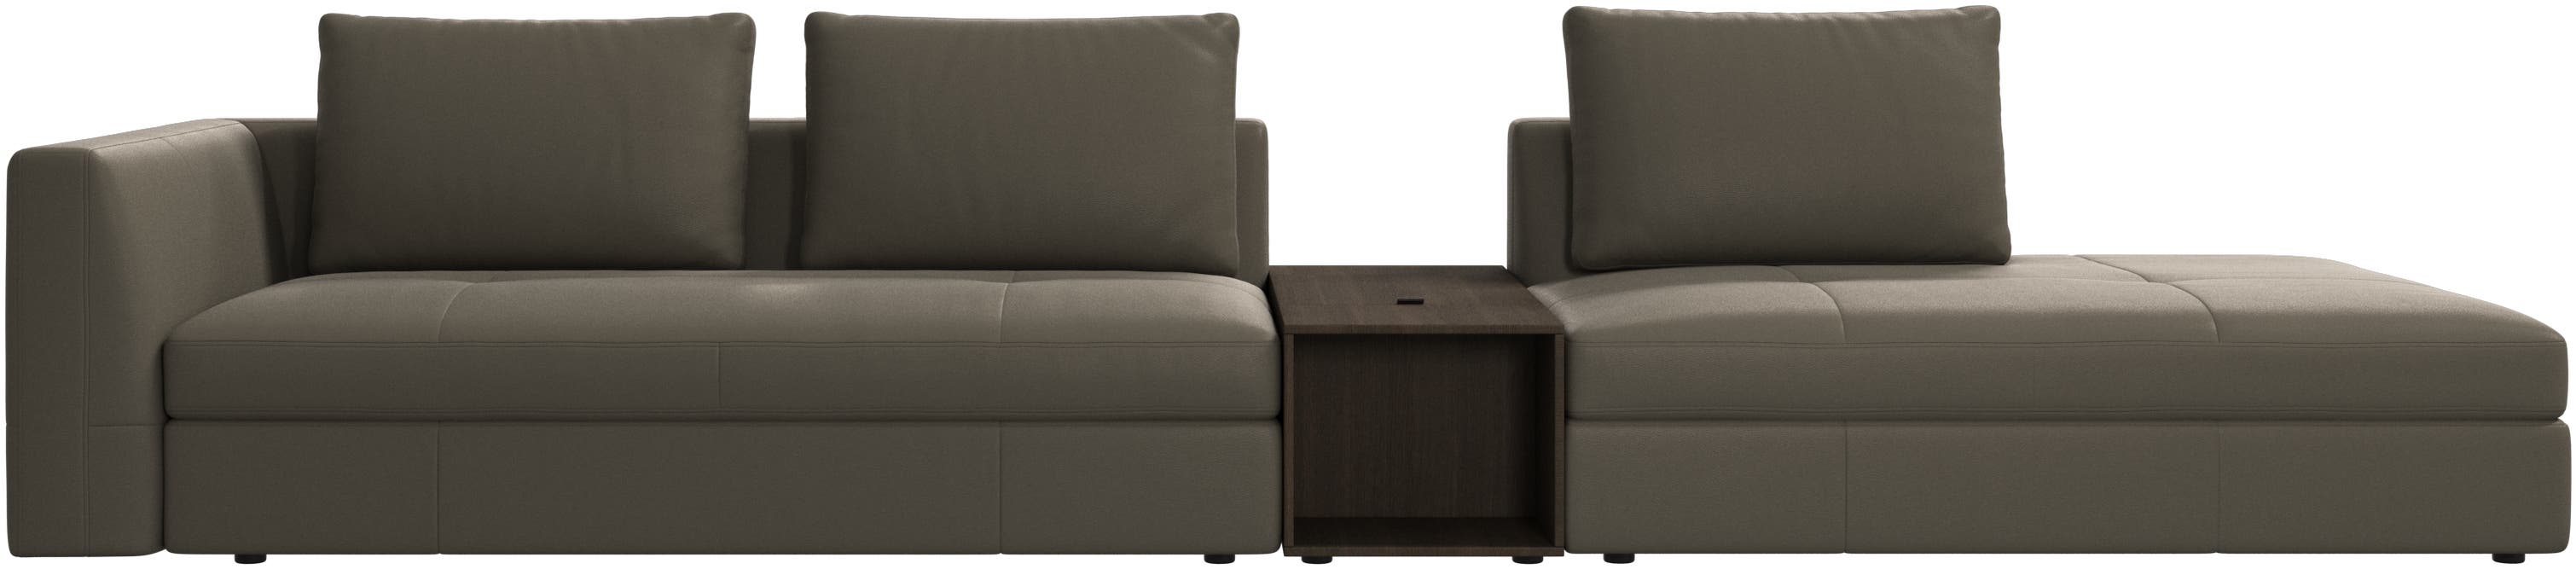 Bergamo 3-seater lounge sofa with storage